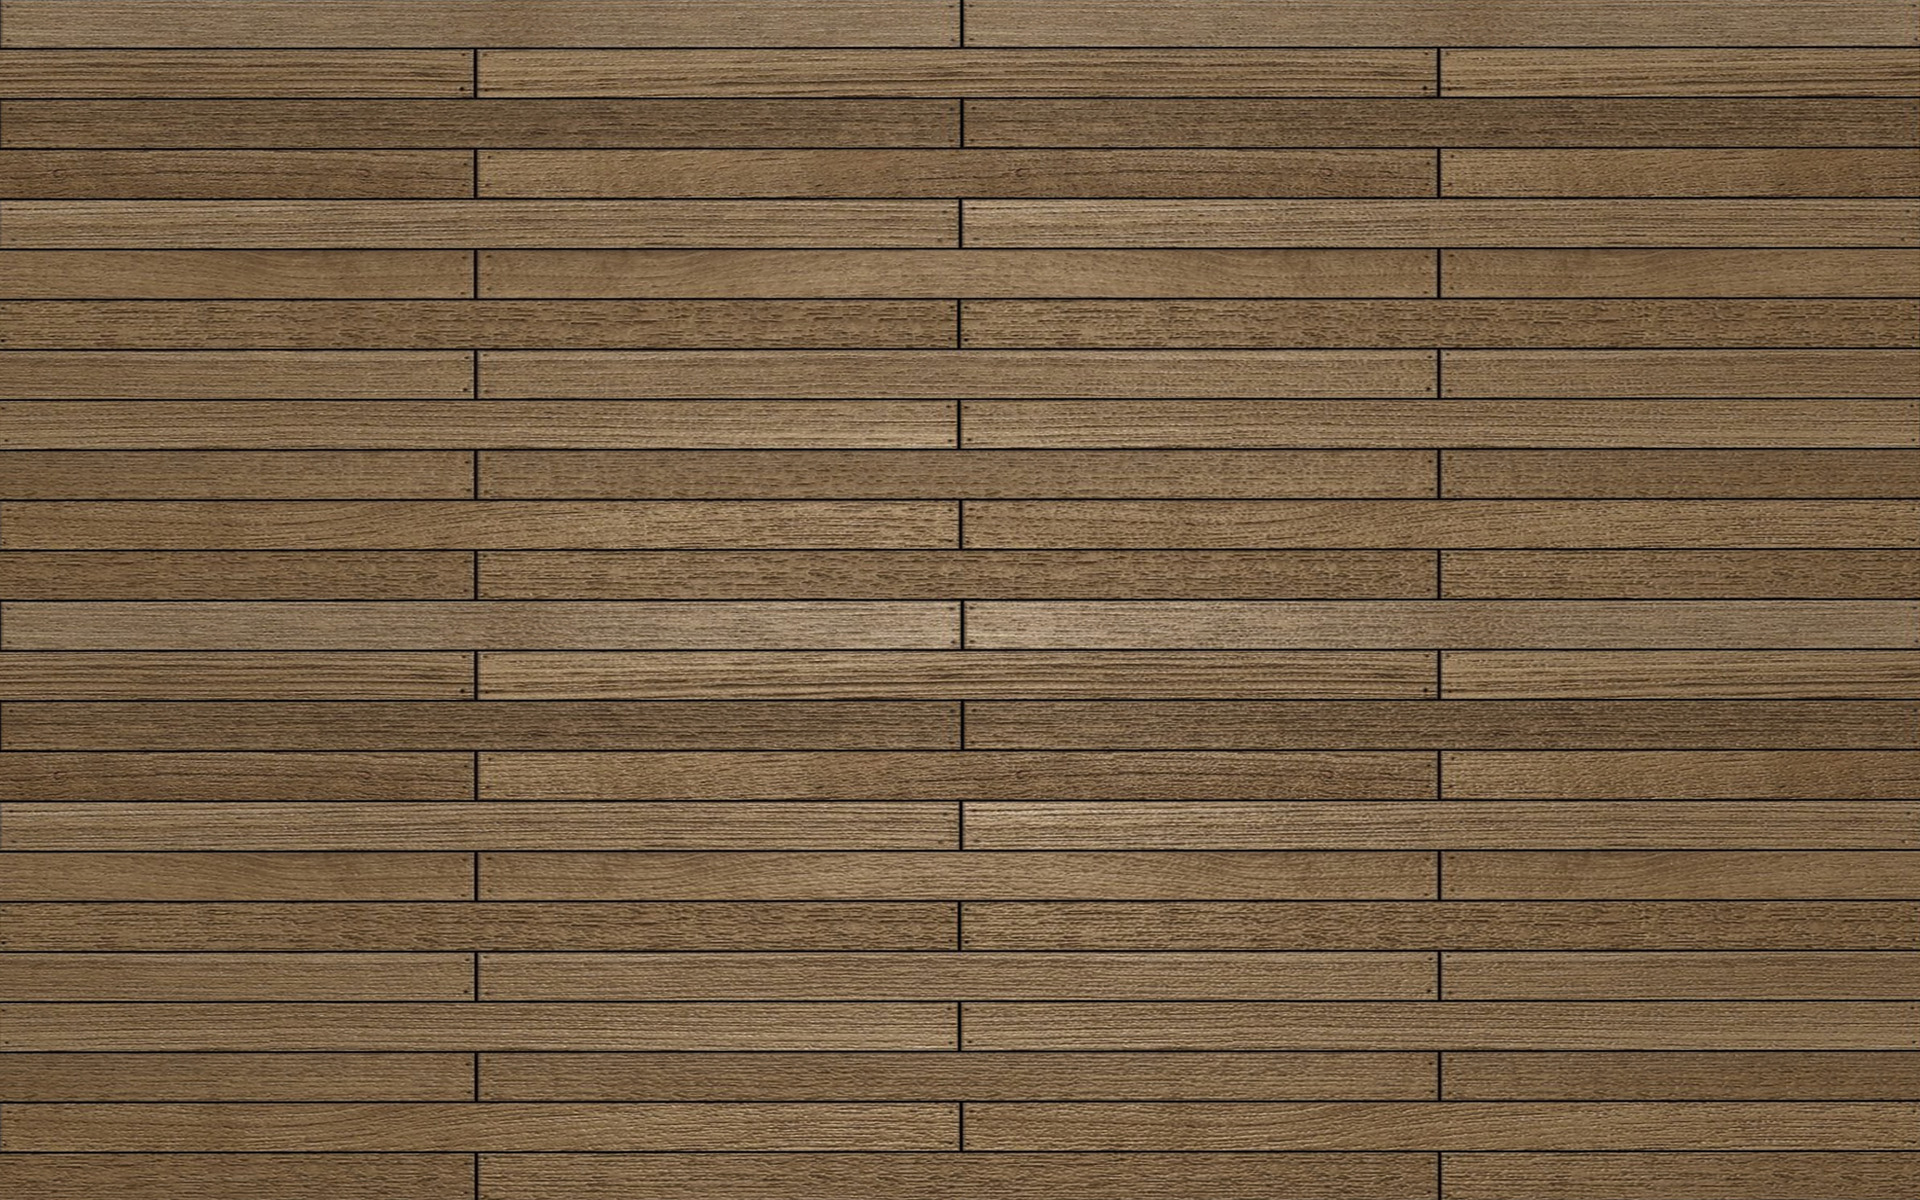 Pics Of Dark Wood Floors wood floor texture 1920x1200